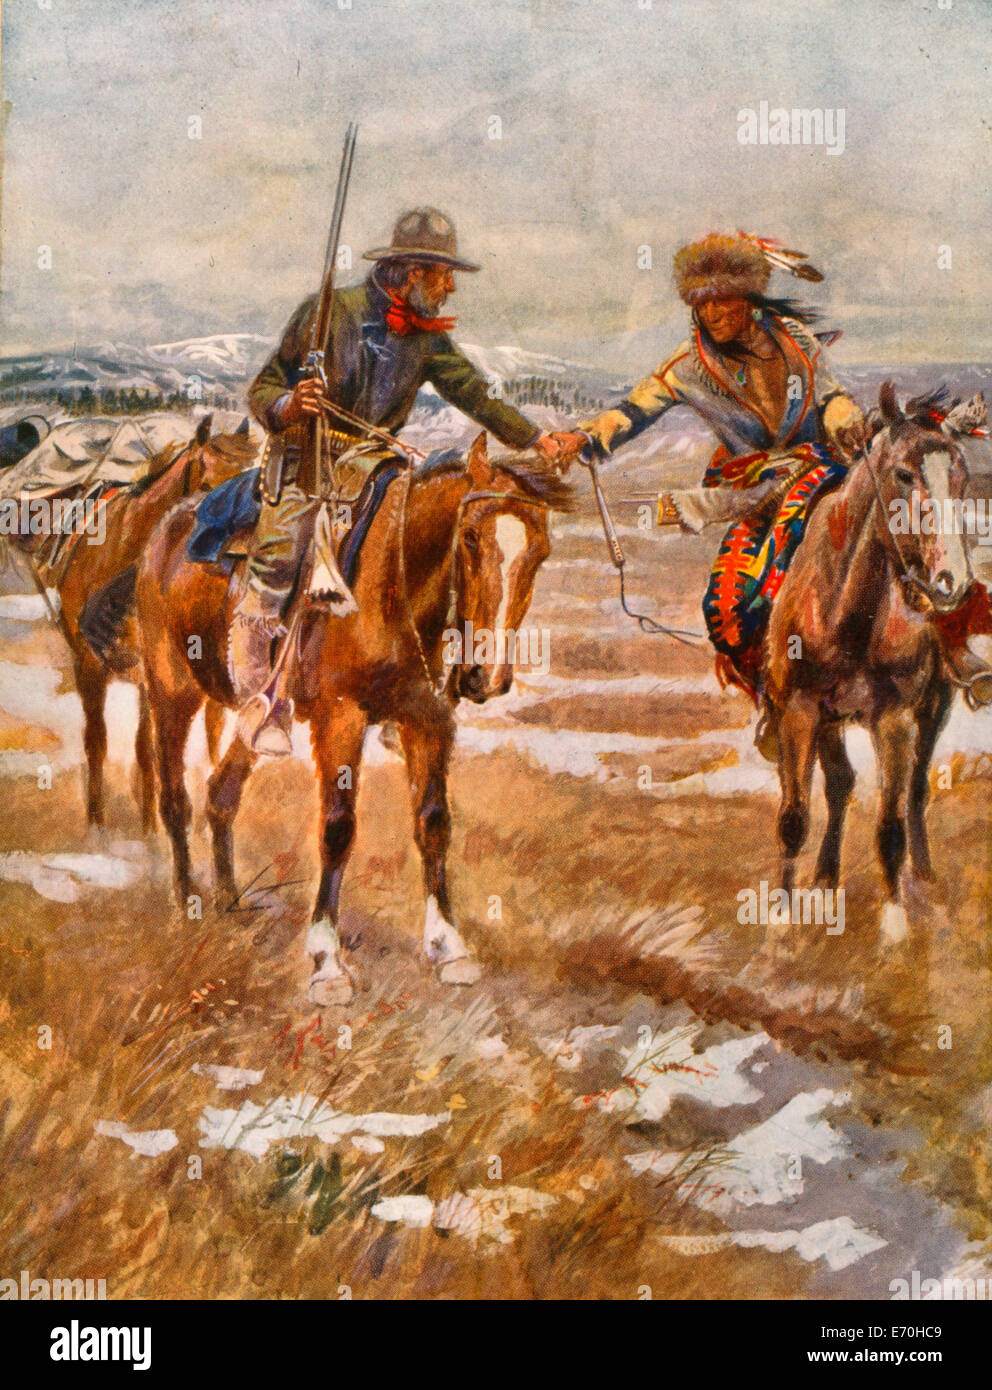 The meeting - Euro-American man, holding rifle, on horseback, shaking hands with Native American on horseback, circa 1910 Stock Photo